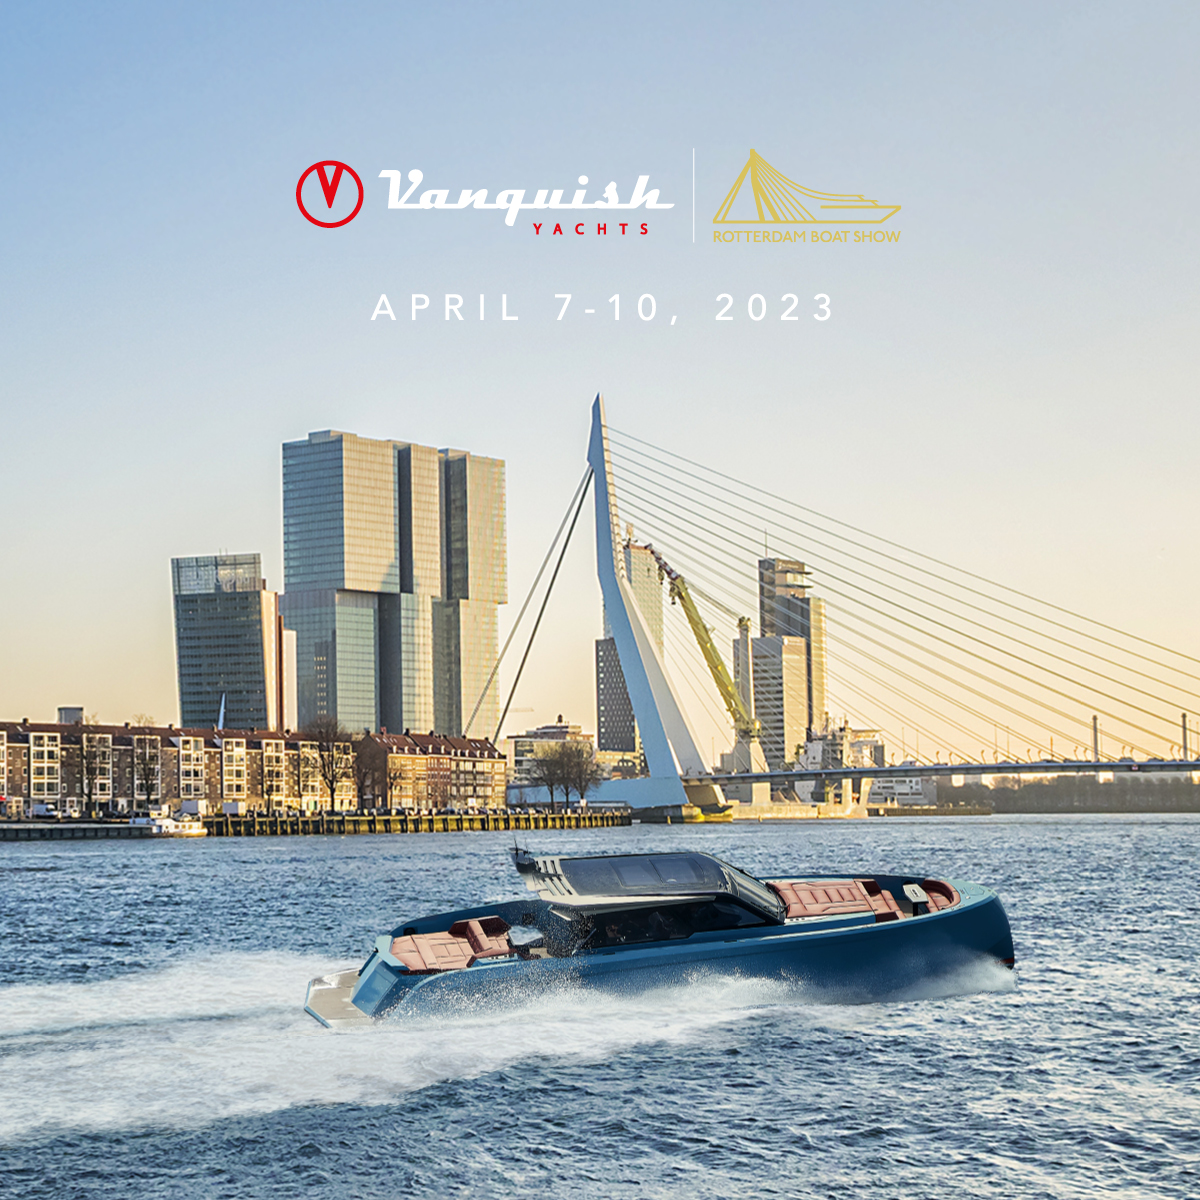 Vanquish Yachts - Rotterdam Boat Show 2023 - Newsletter Header - 1200 x 1200 px